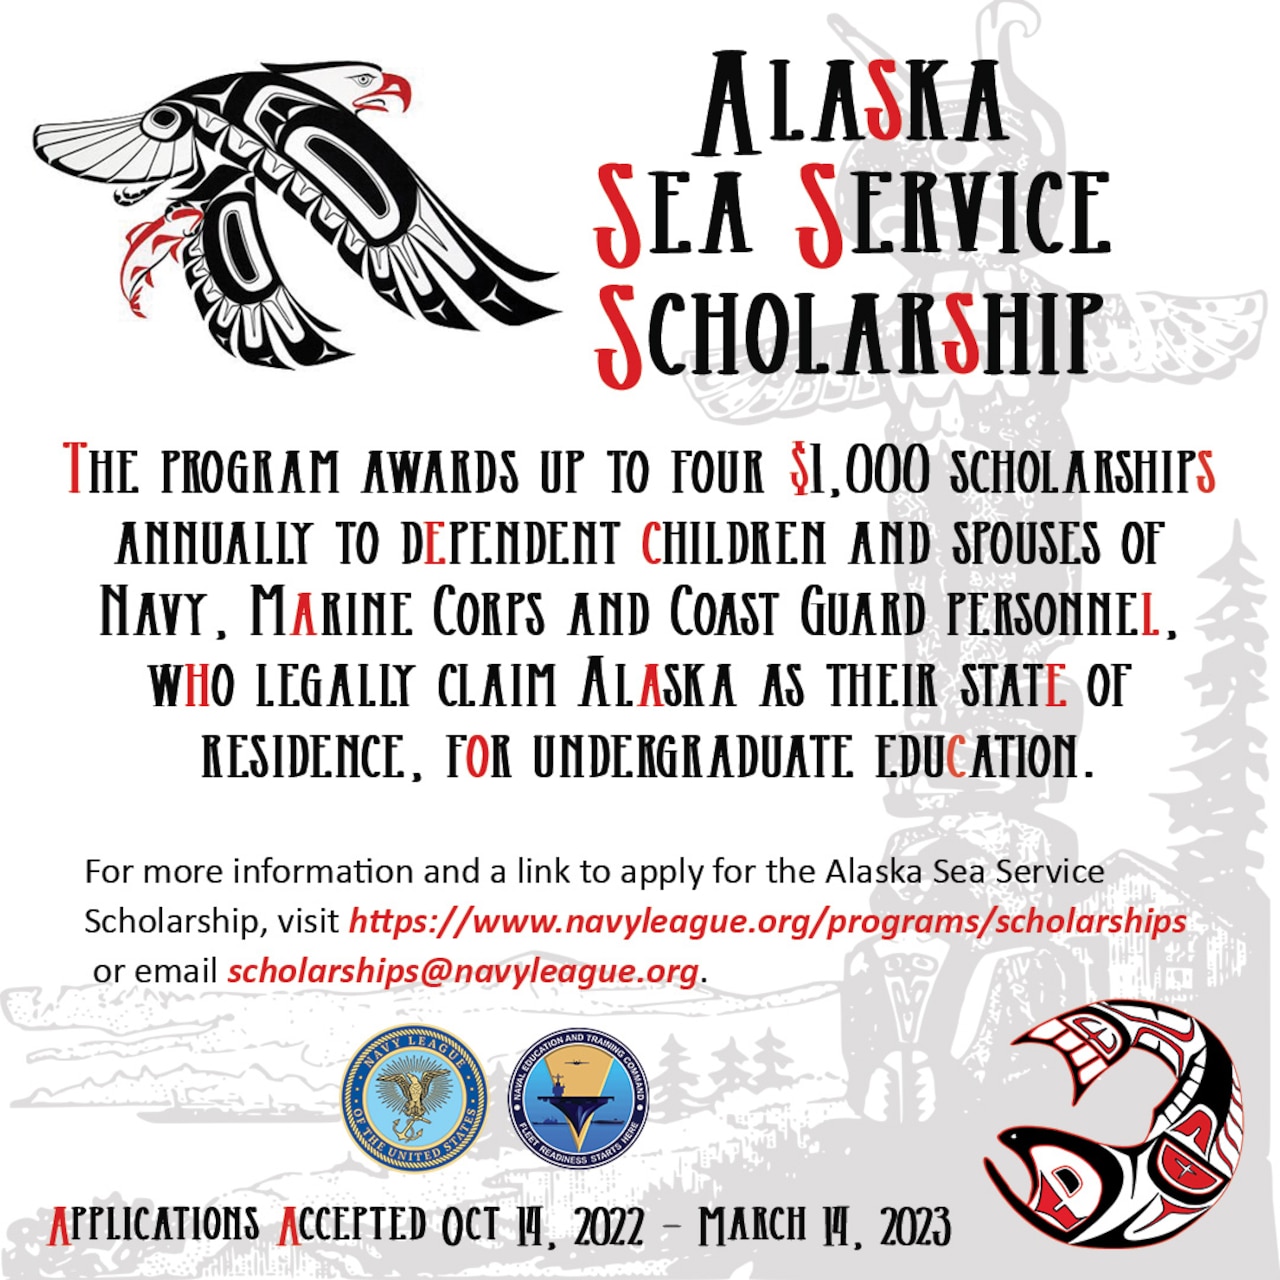 Alaska Sea Service Scholarship announcement.